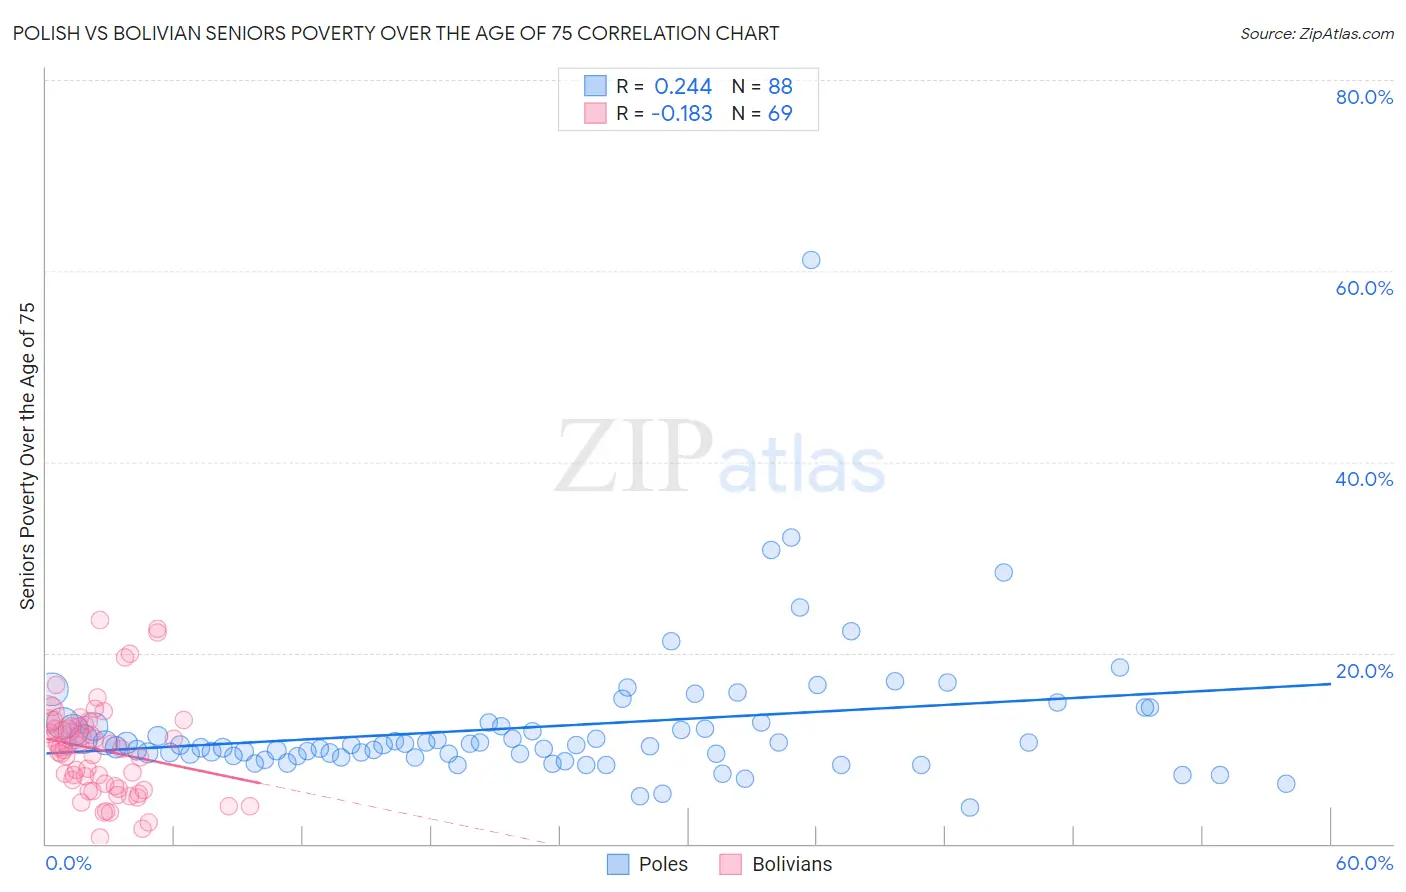 Polish vs Bolivian Seniors Poverty Over the Age of 75